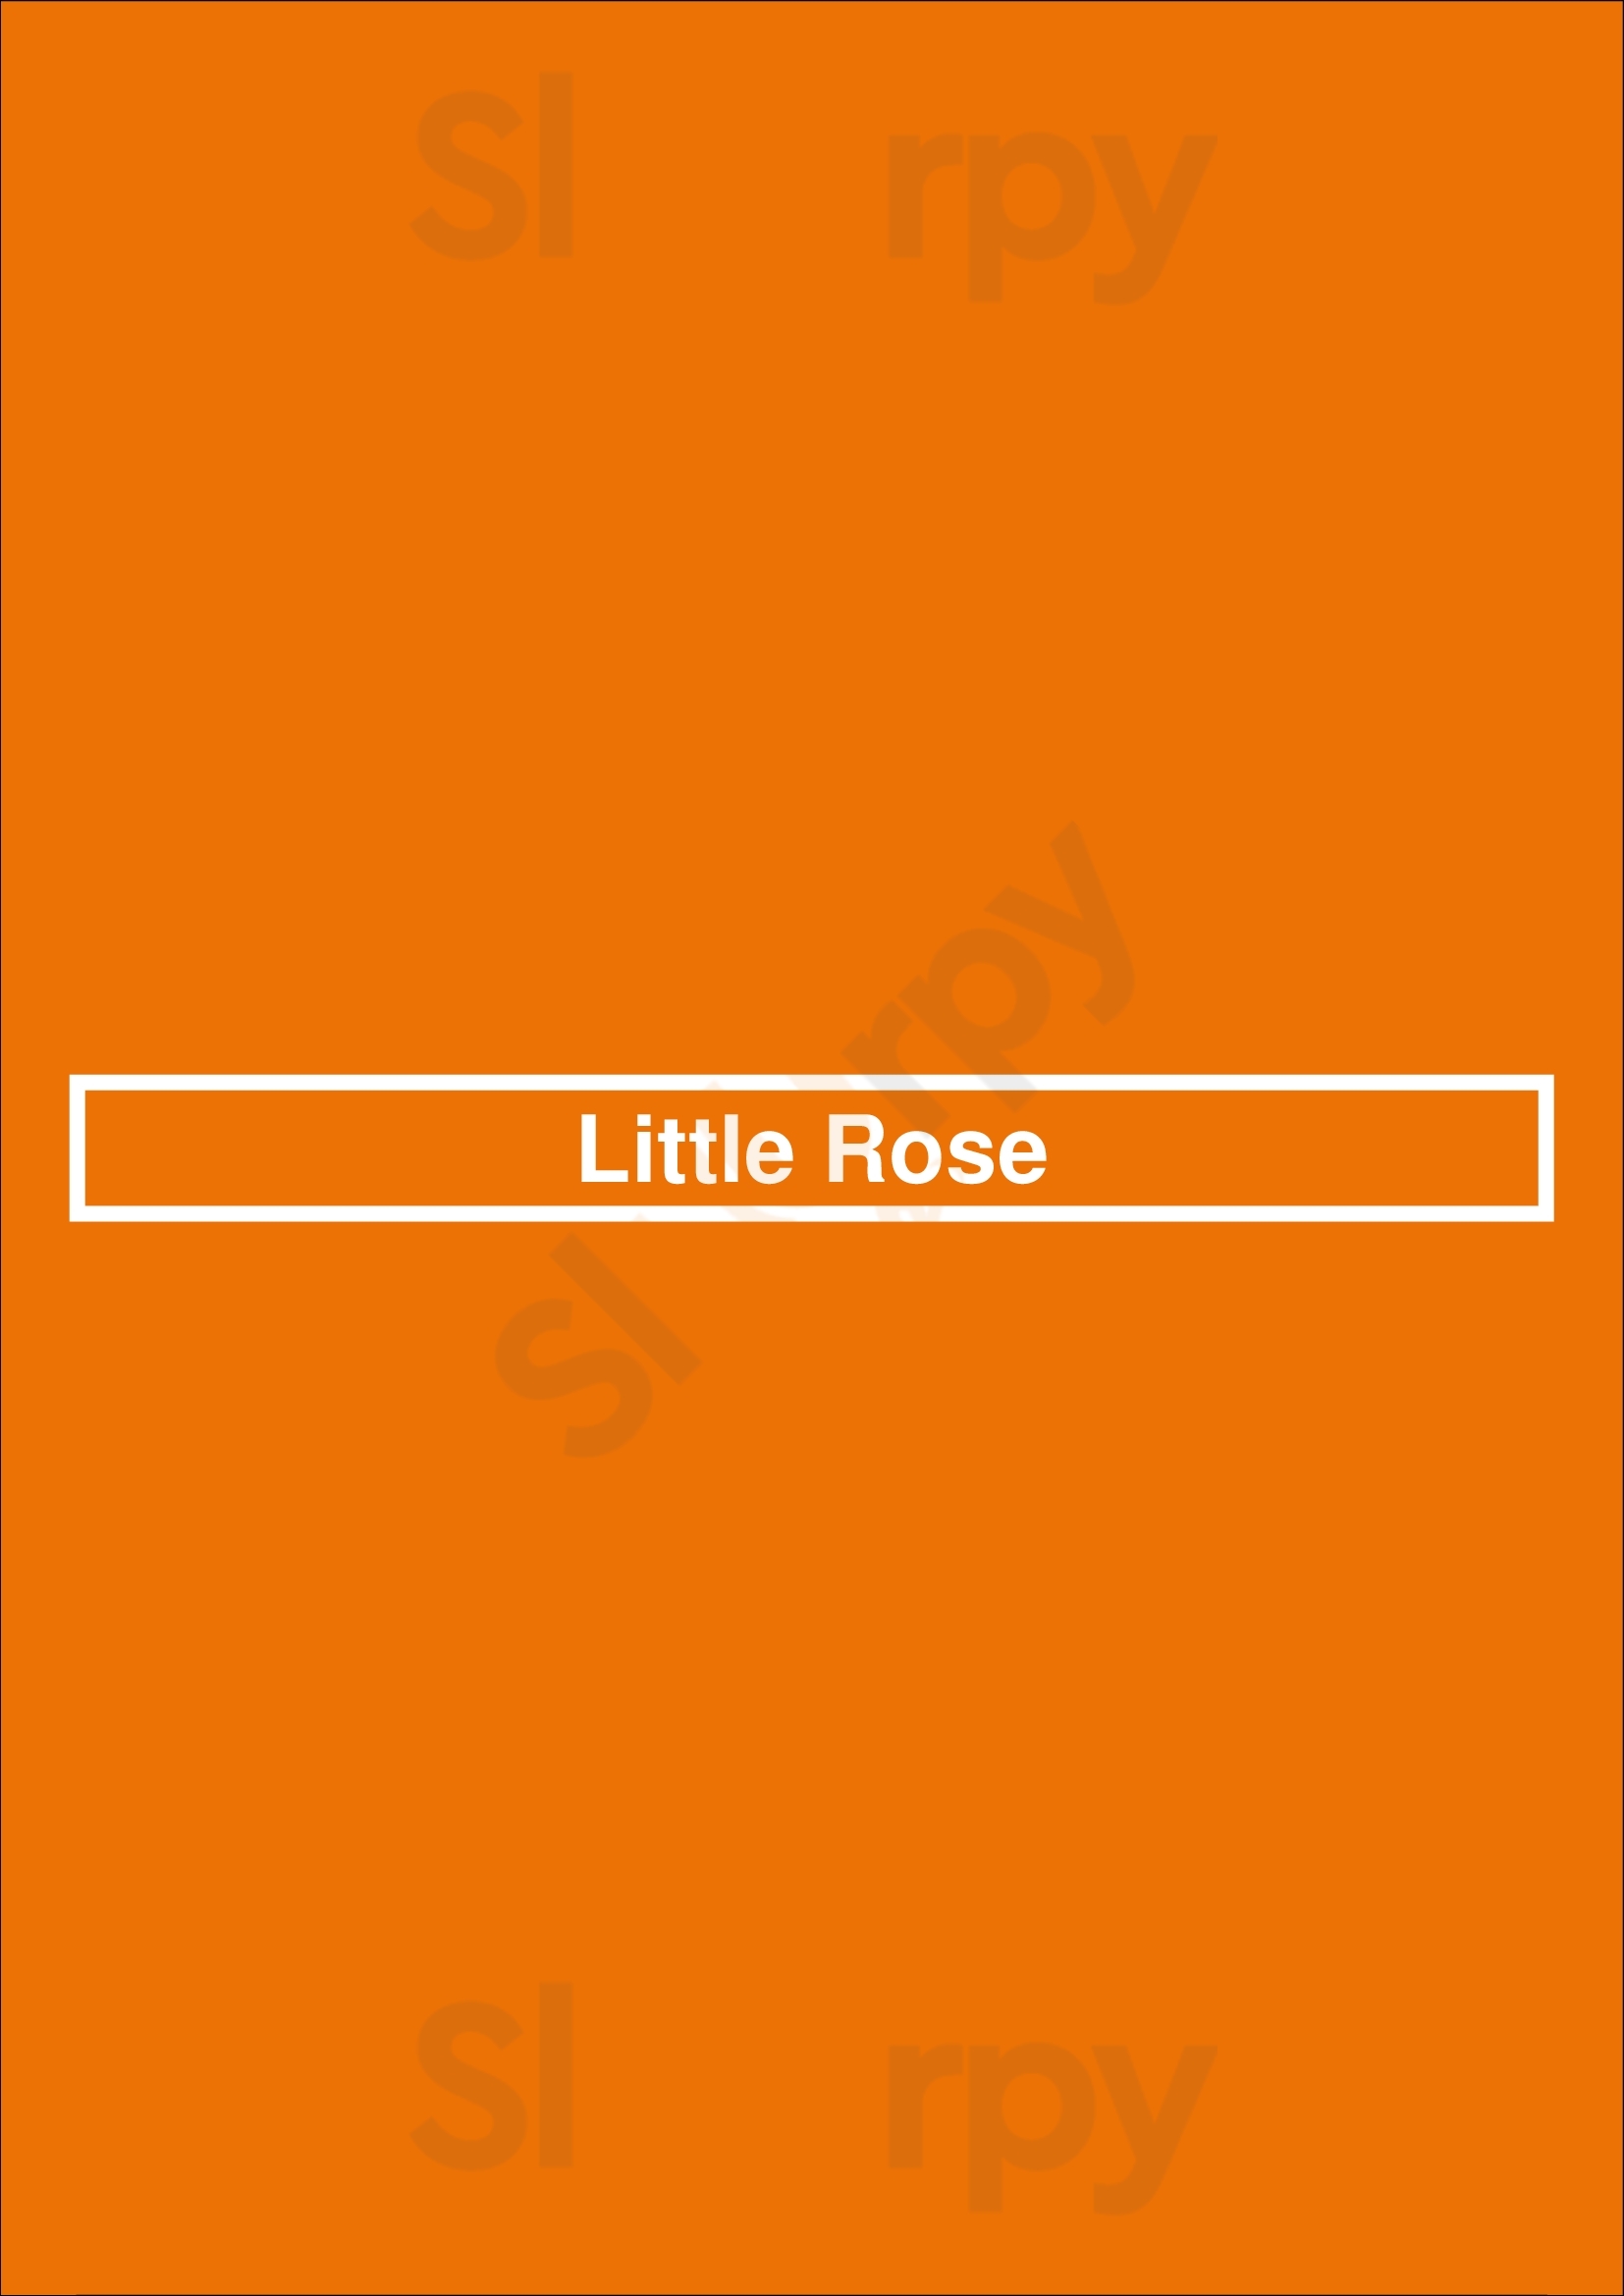 Little Rose Buenos Aires Menu - 1